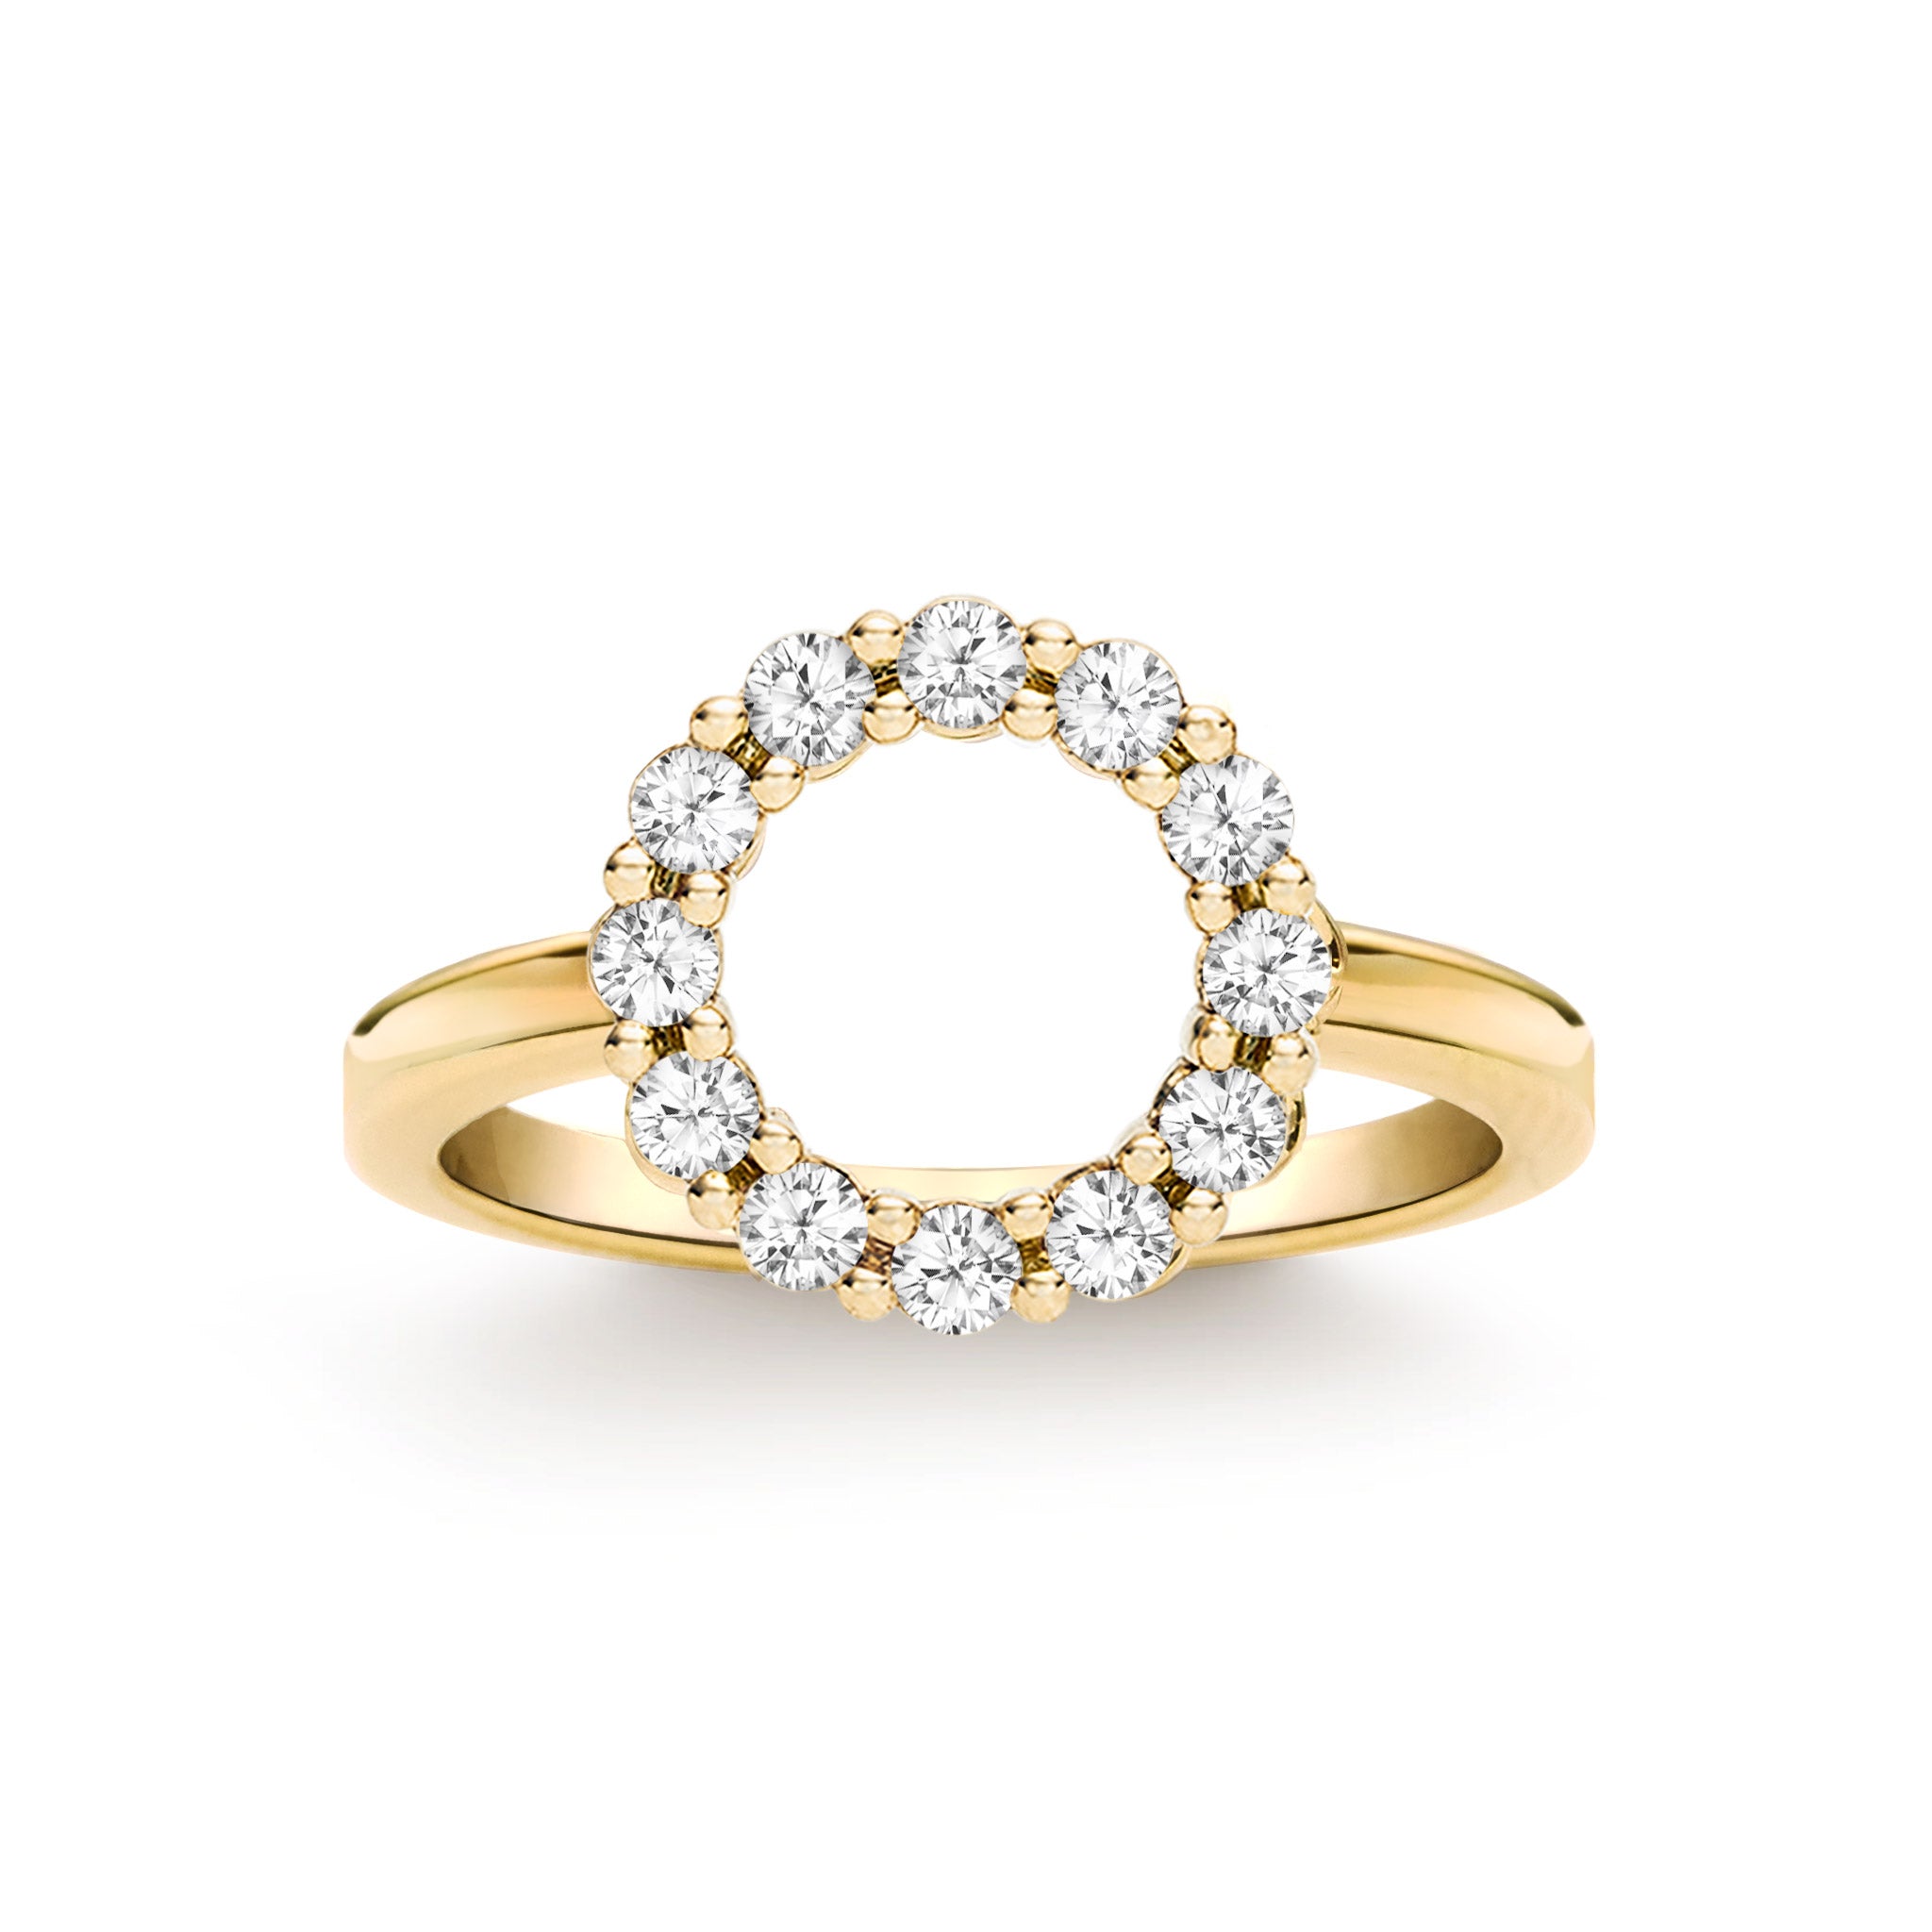 Tear Drop Moonstone Ring Diamond Art Deco Jewelry For Wife June Birthstone  Ring | eBay